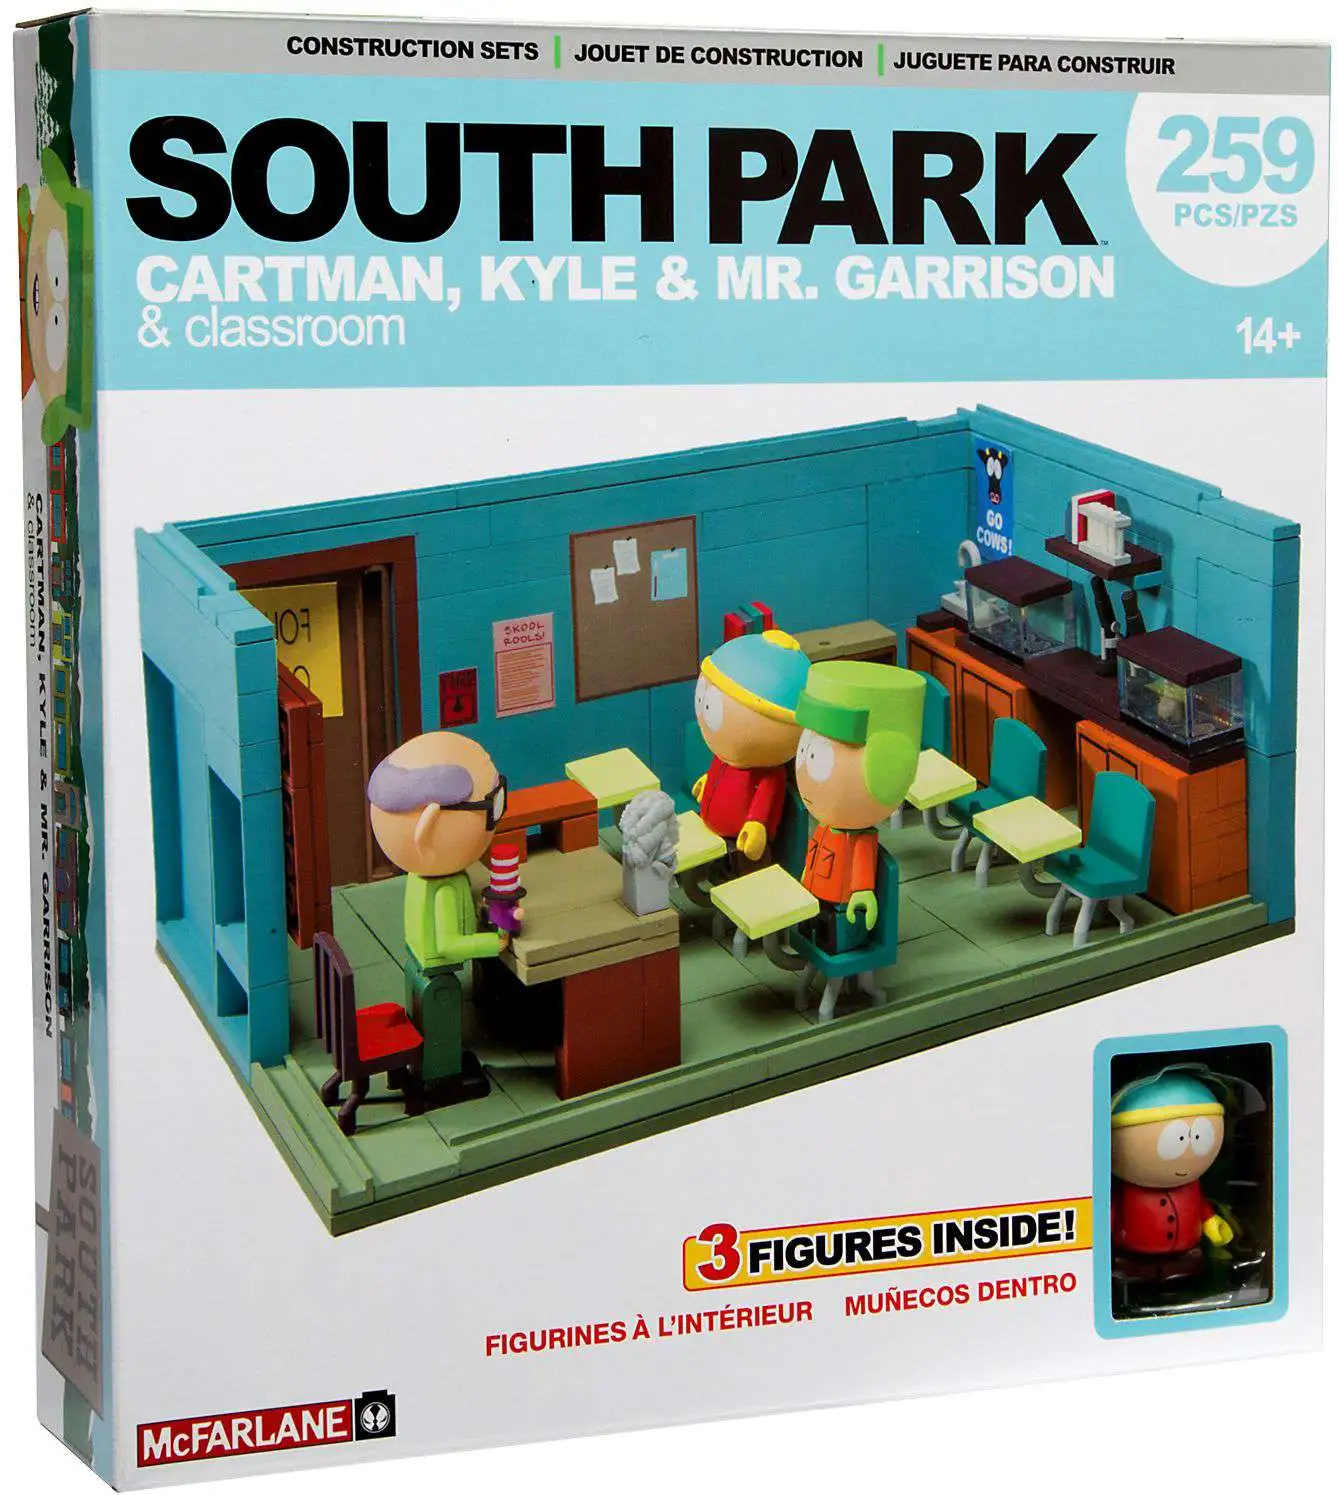 GARRISON CLASSROOM With Kyle Cartman CONSTRUCTION SET Macfarlane SOUTH PARK MR 